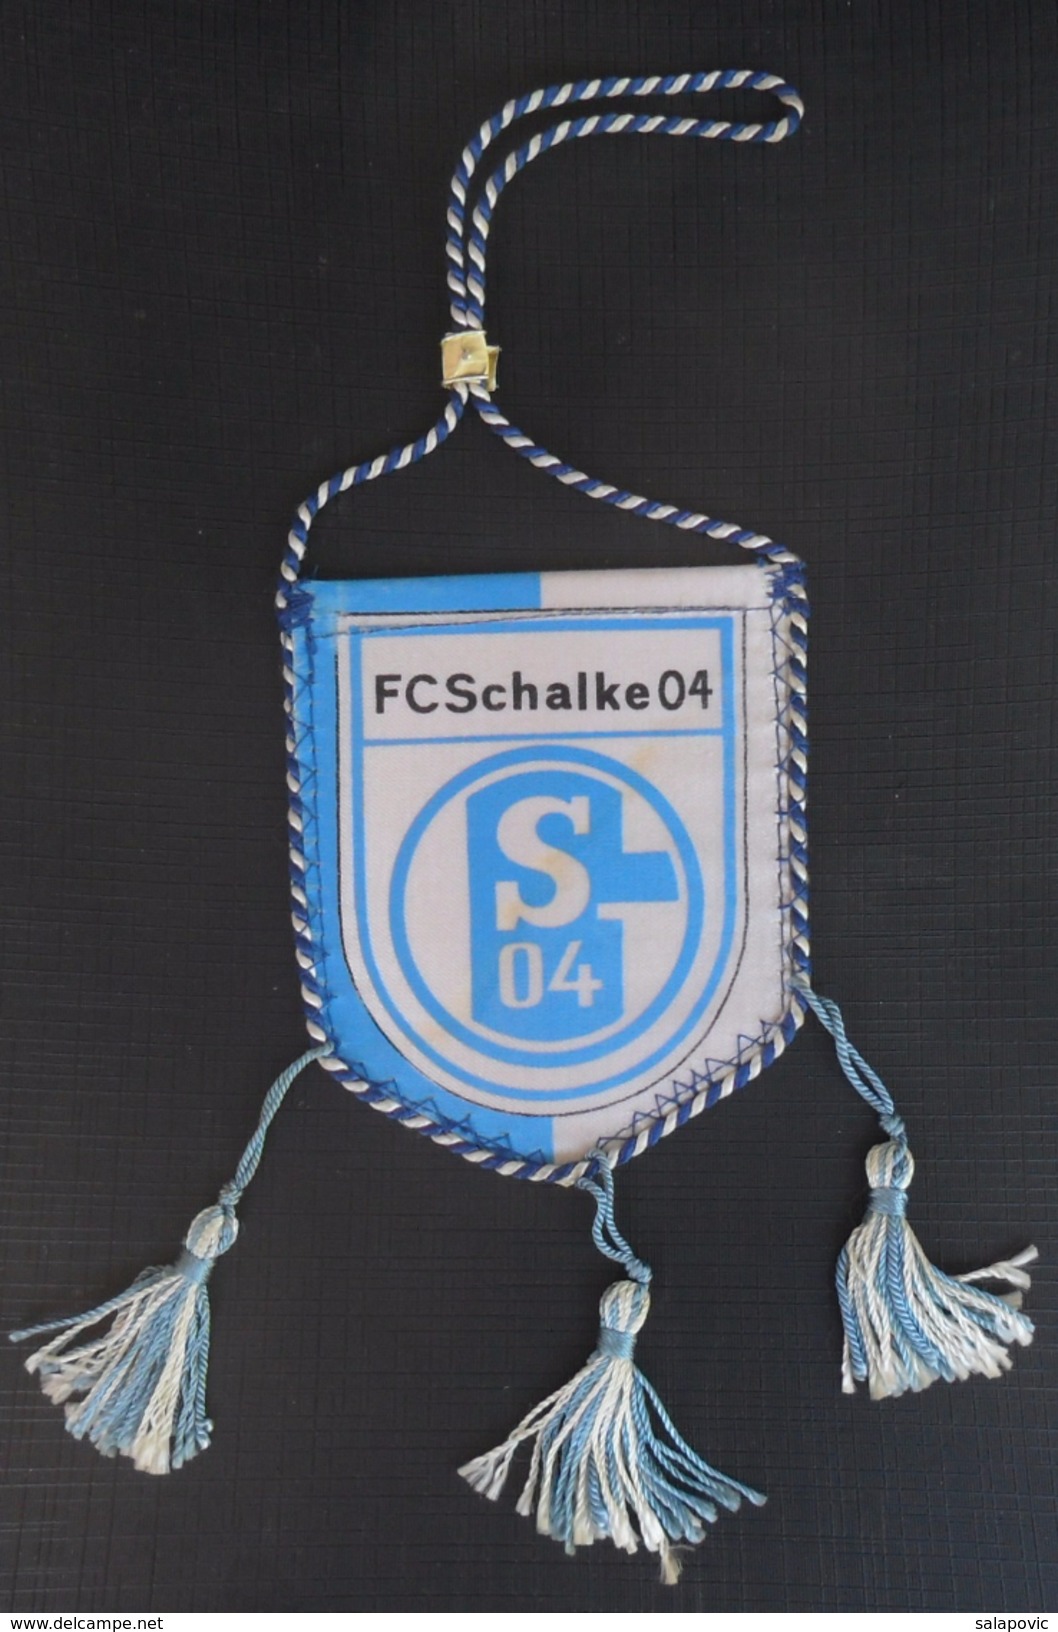 FC Gelsenkirchen-Schalke 04 GERMANY  FOOTBALL CLUB, SOCCER / FUTBOL / CALCIO, OLD PENNANT, SPORTS FLAG - Apparel, Souvenirs & Other